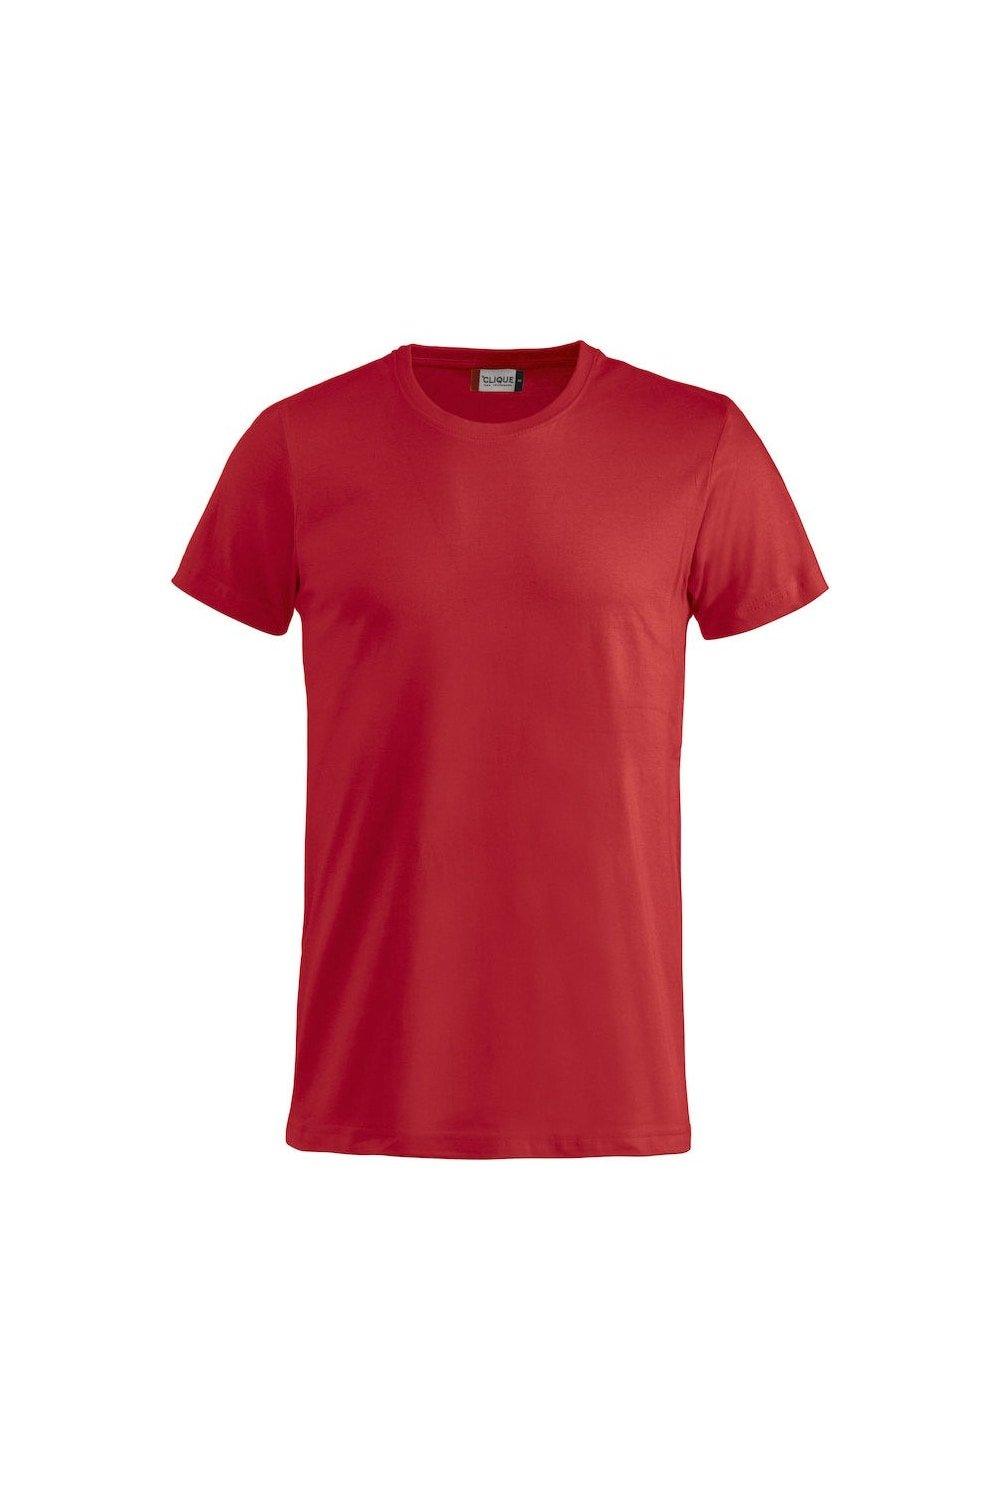 Базовая футболка Clique, красный футболка clique с надписью 42 размер